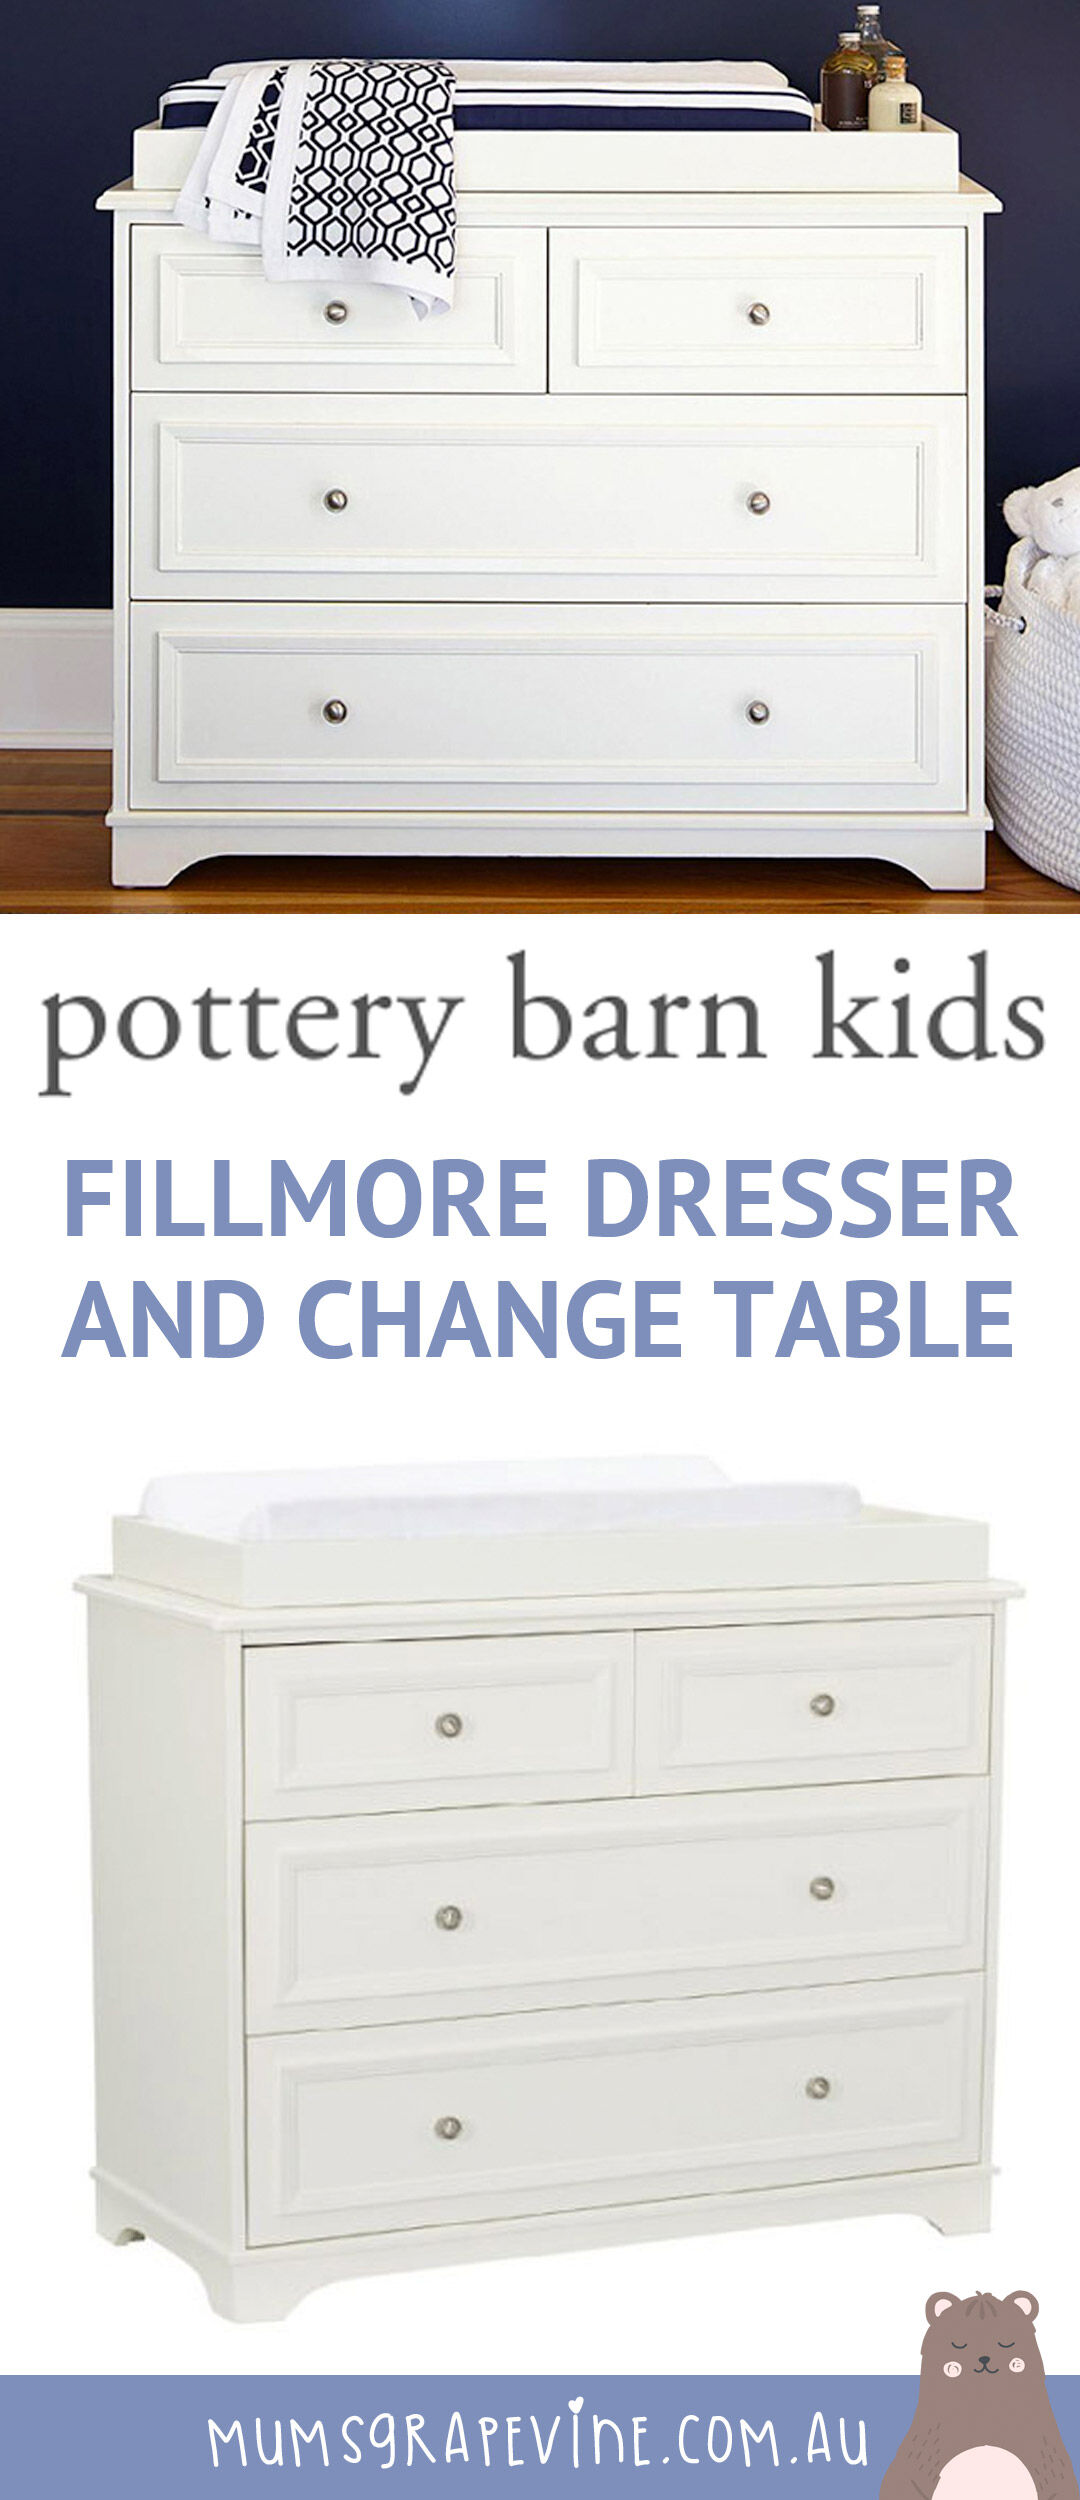 fillmore dresser & changing table topper